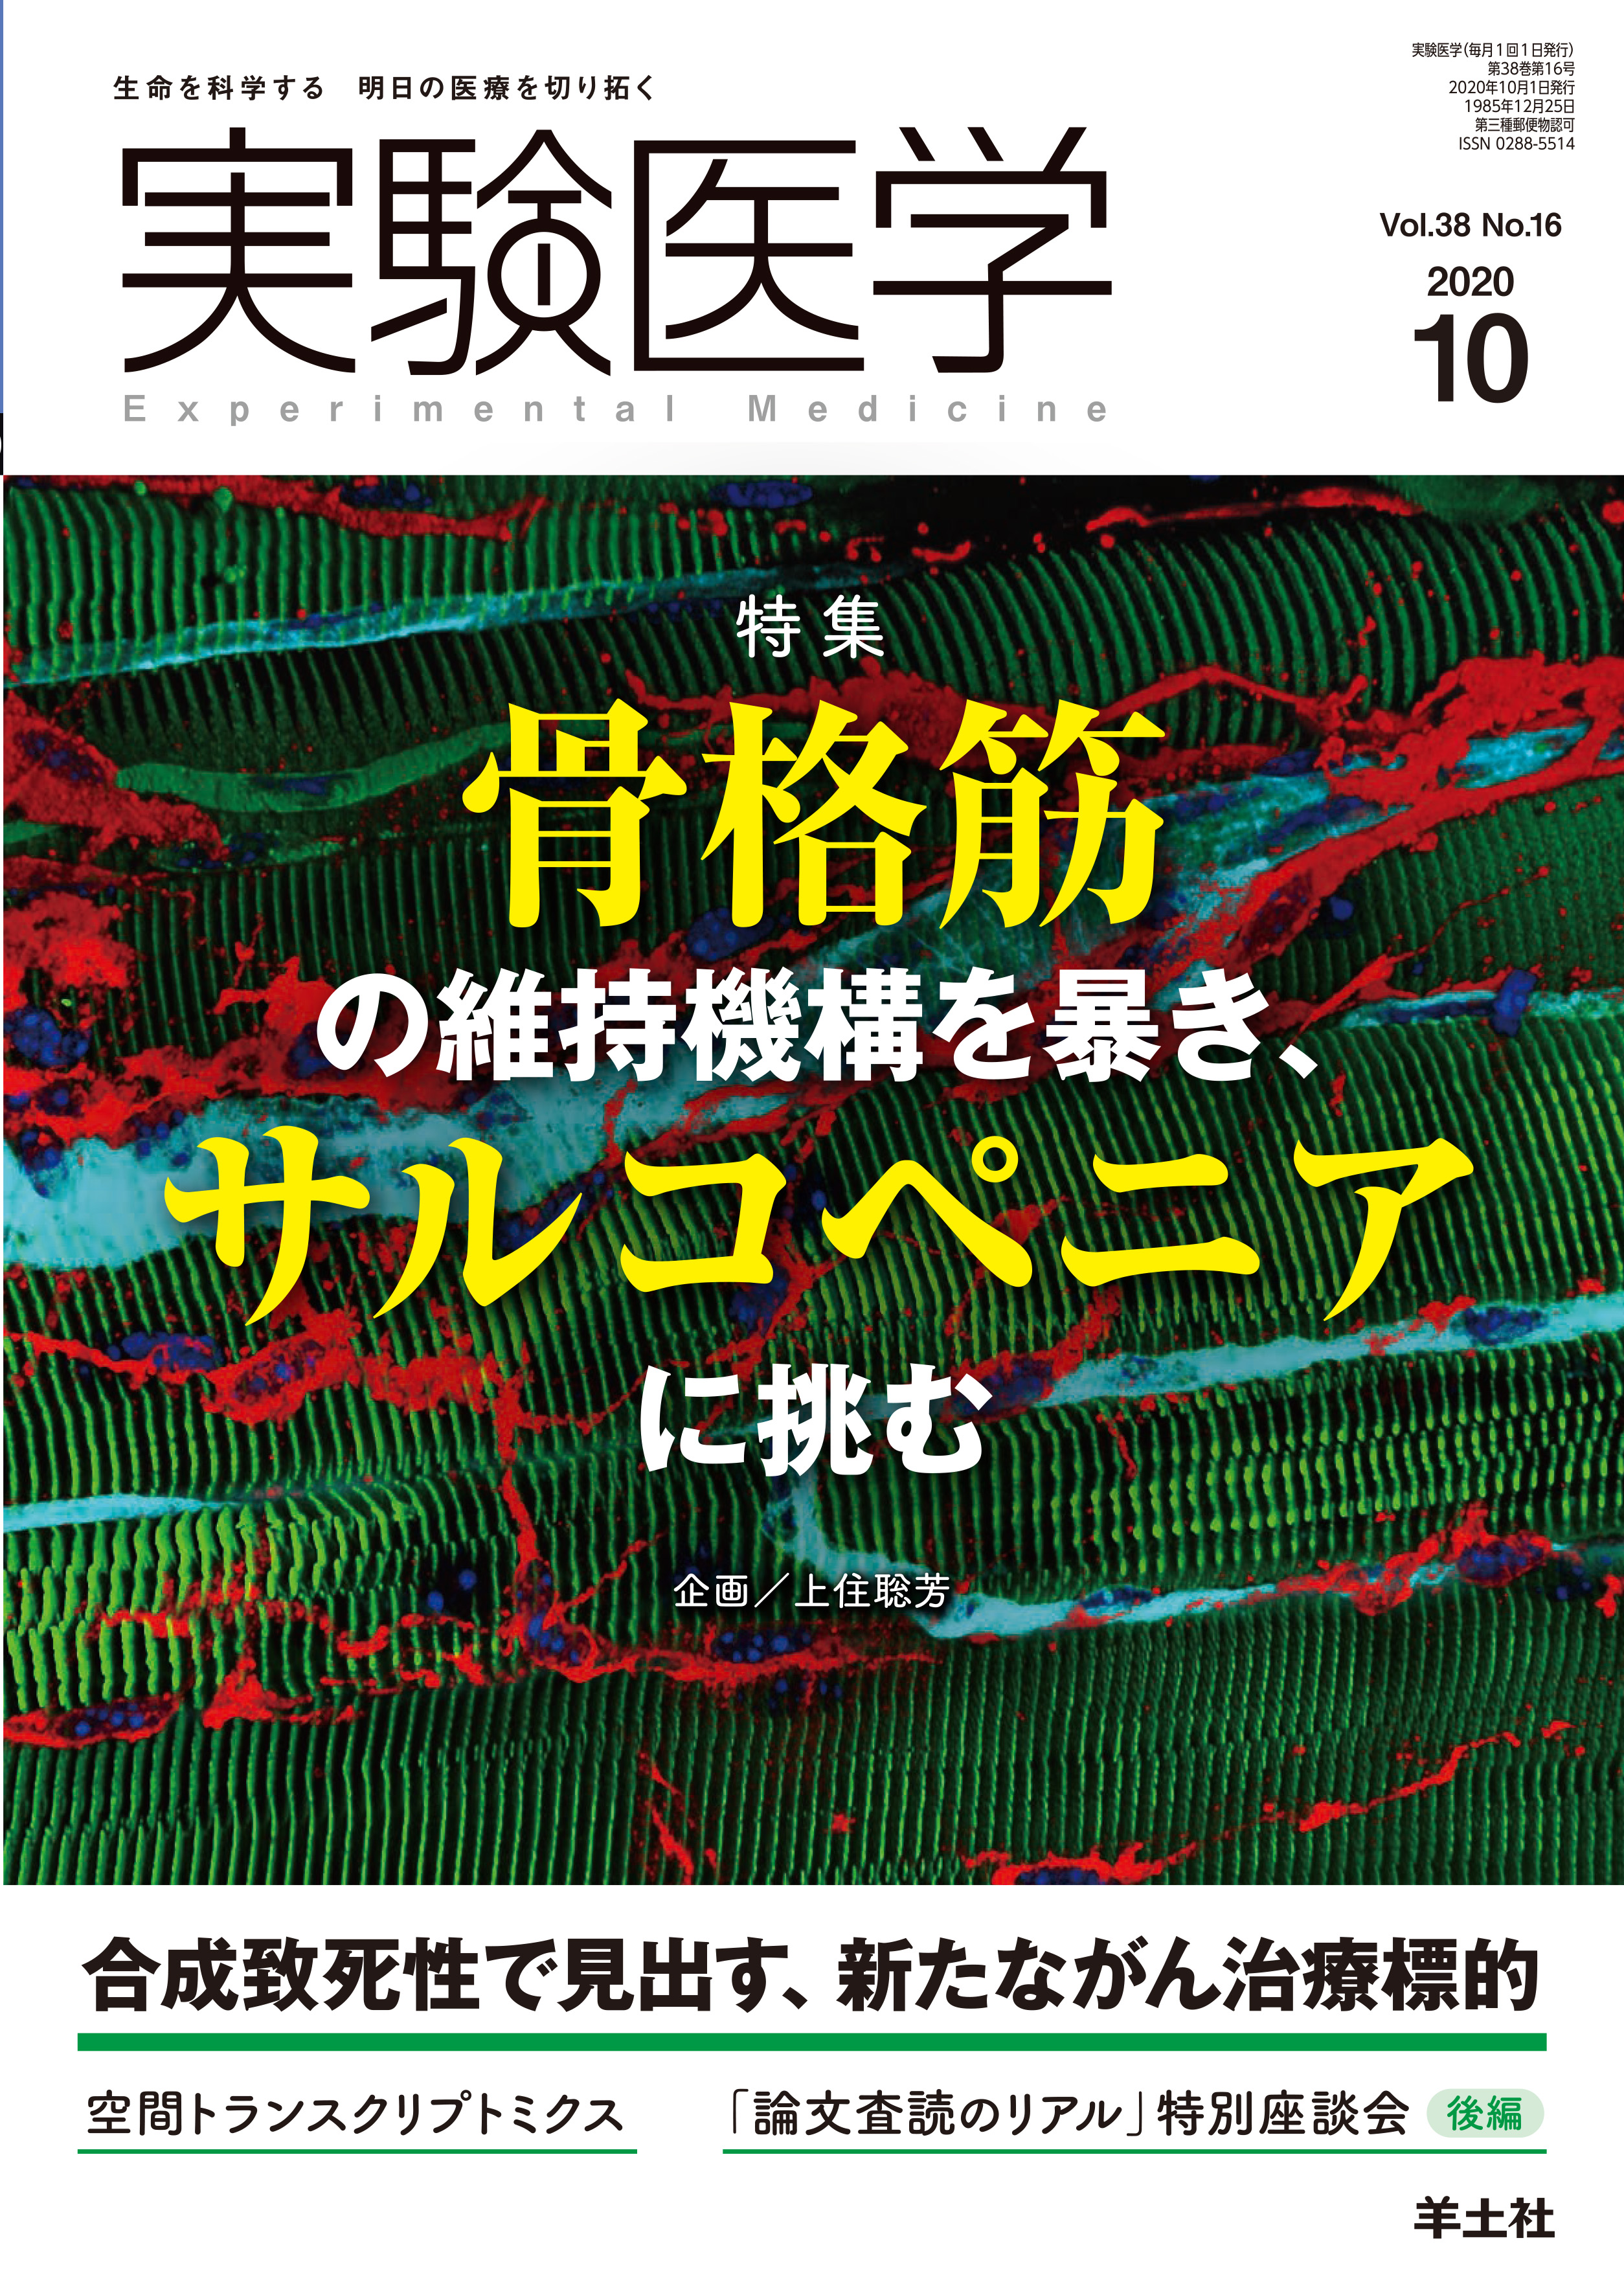 実験医学 Vol 38 No 16 電子版 医書 Jp